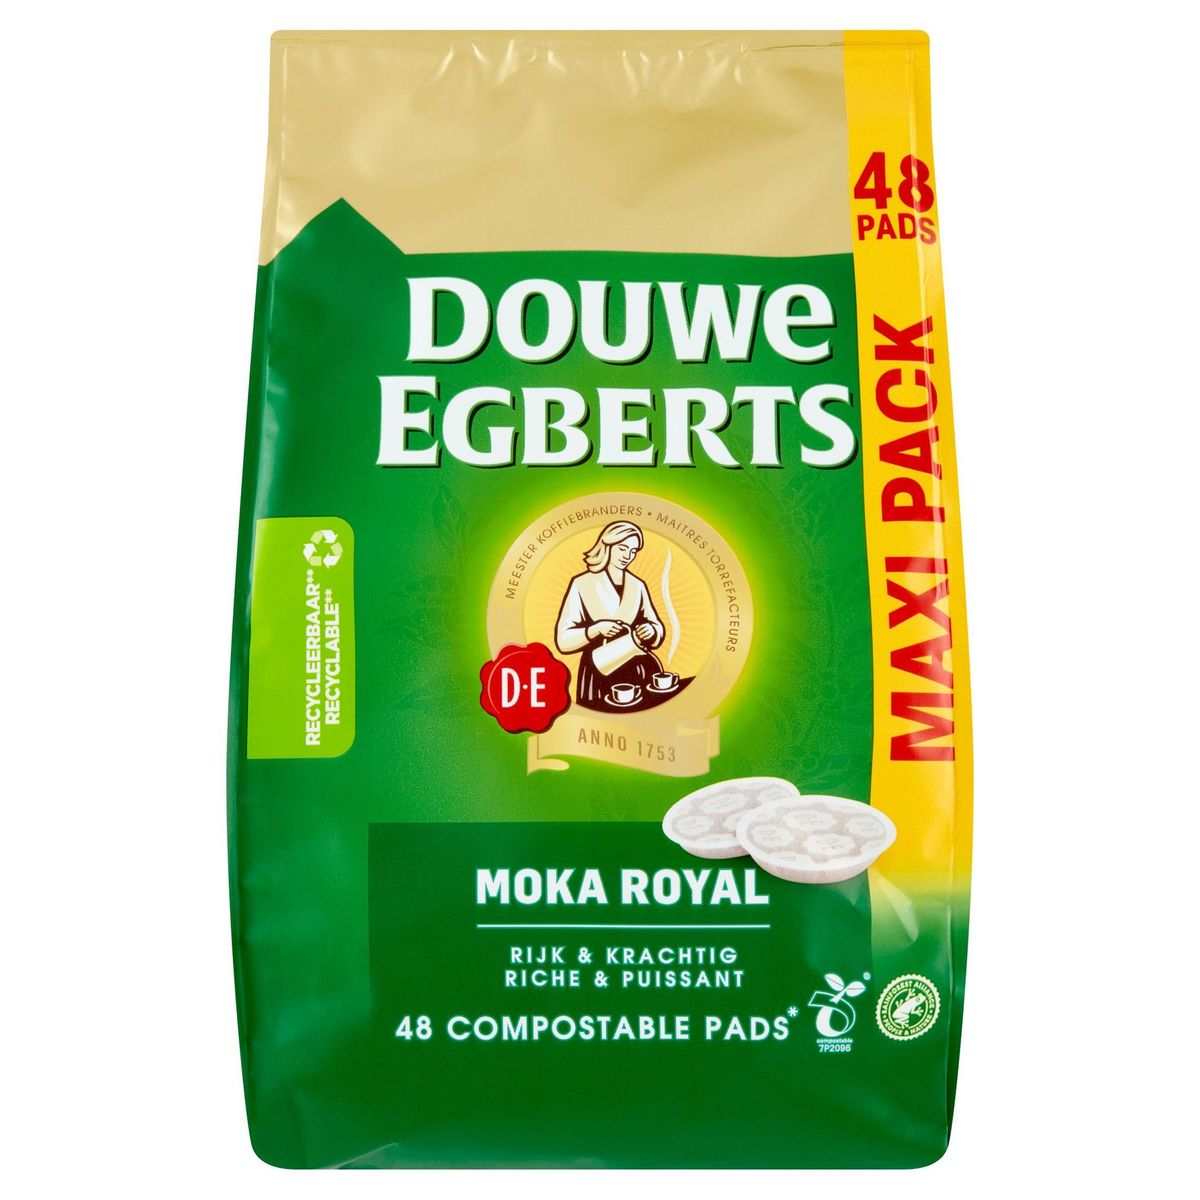 Douwe Egberts Moka Royal Maxi Pack 48 Stuks 333 g